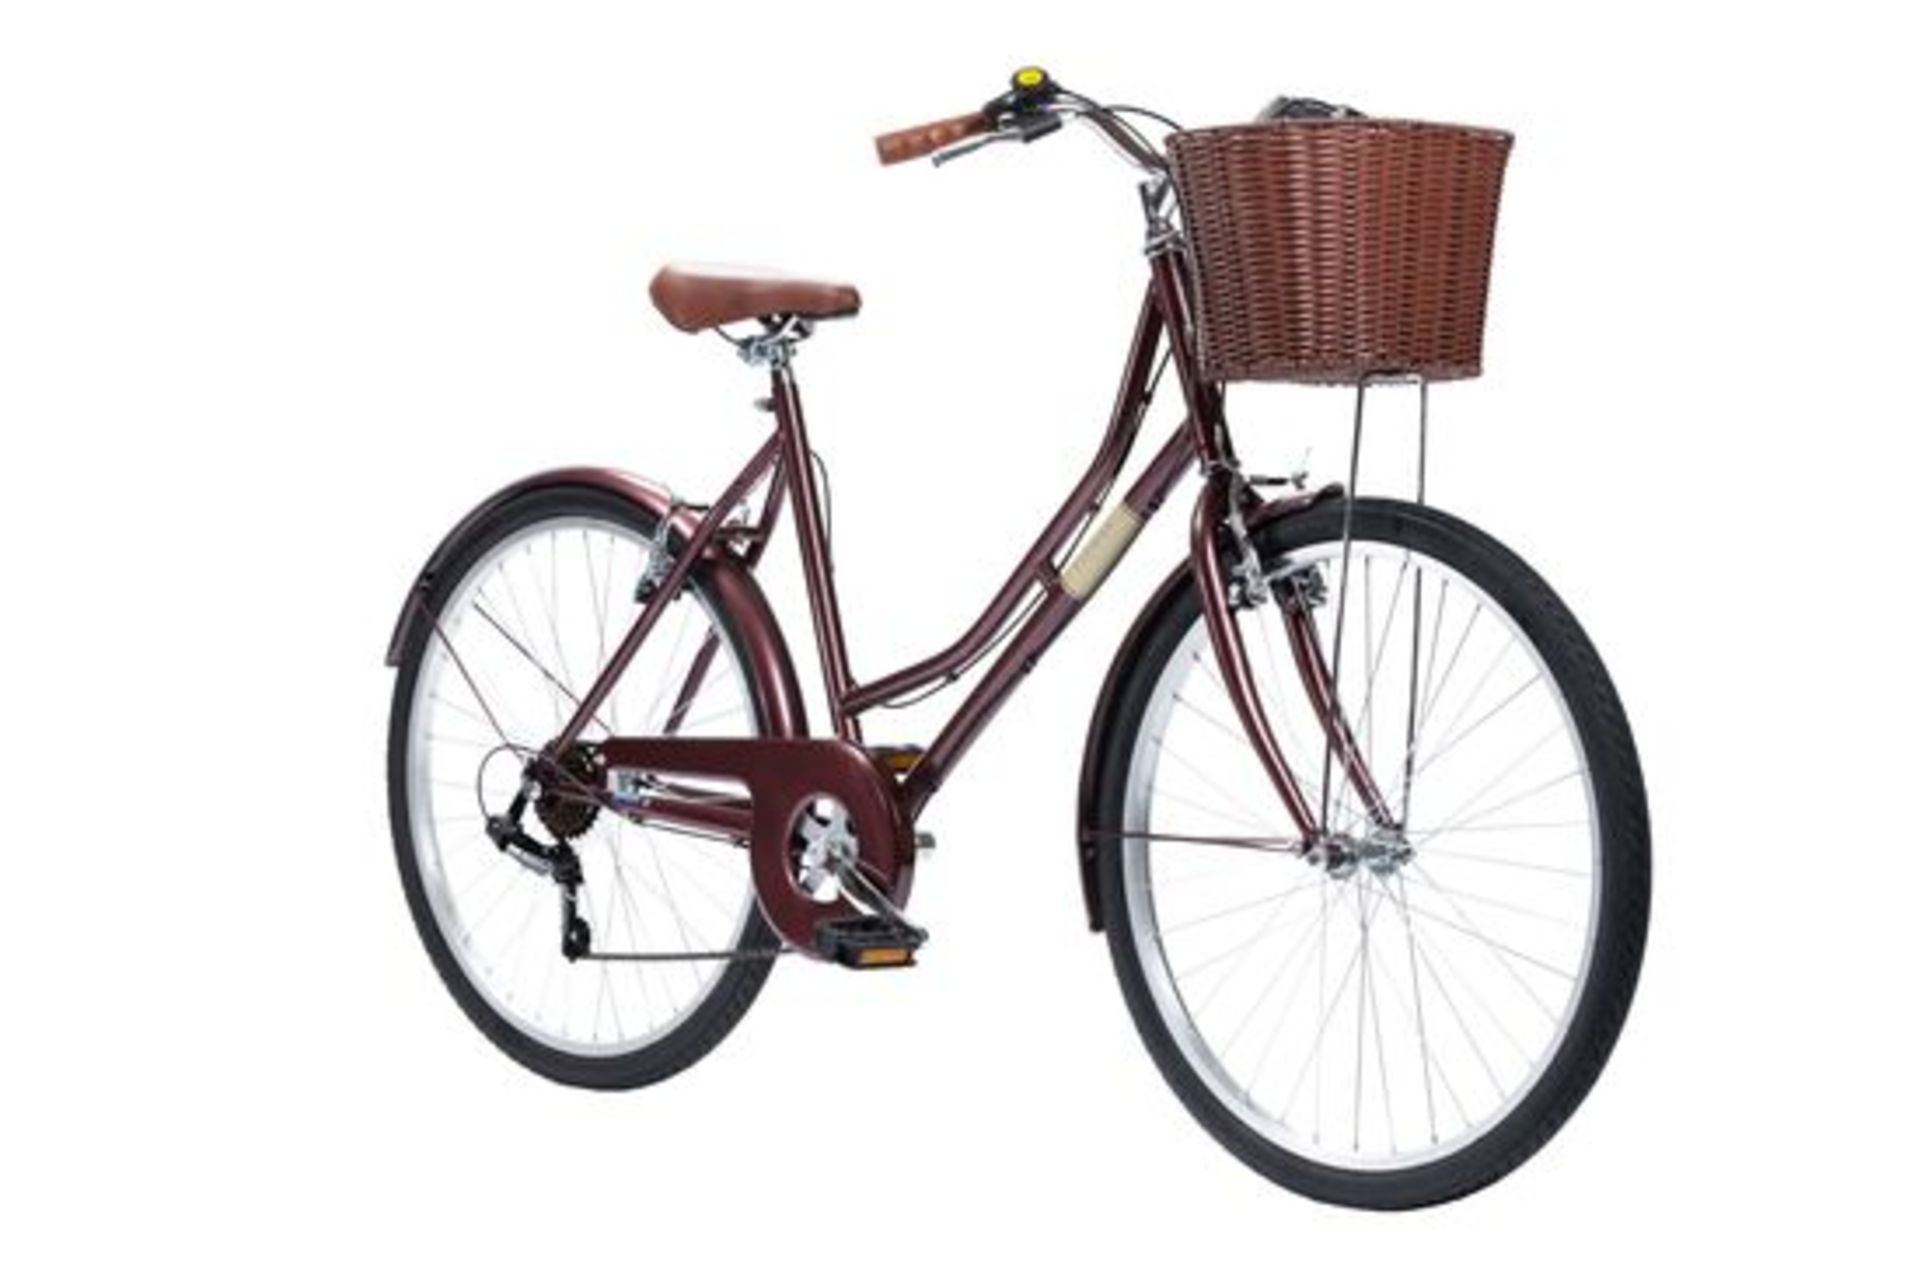 Insync Vienna Ladies Classic Heritage Bike - 26" Wheel, 6 Speed - Burgundy. RRP £277.00. The classic